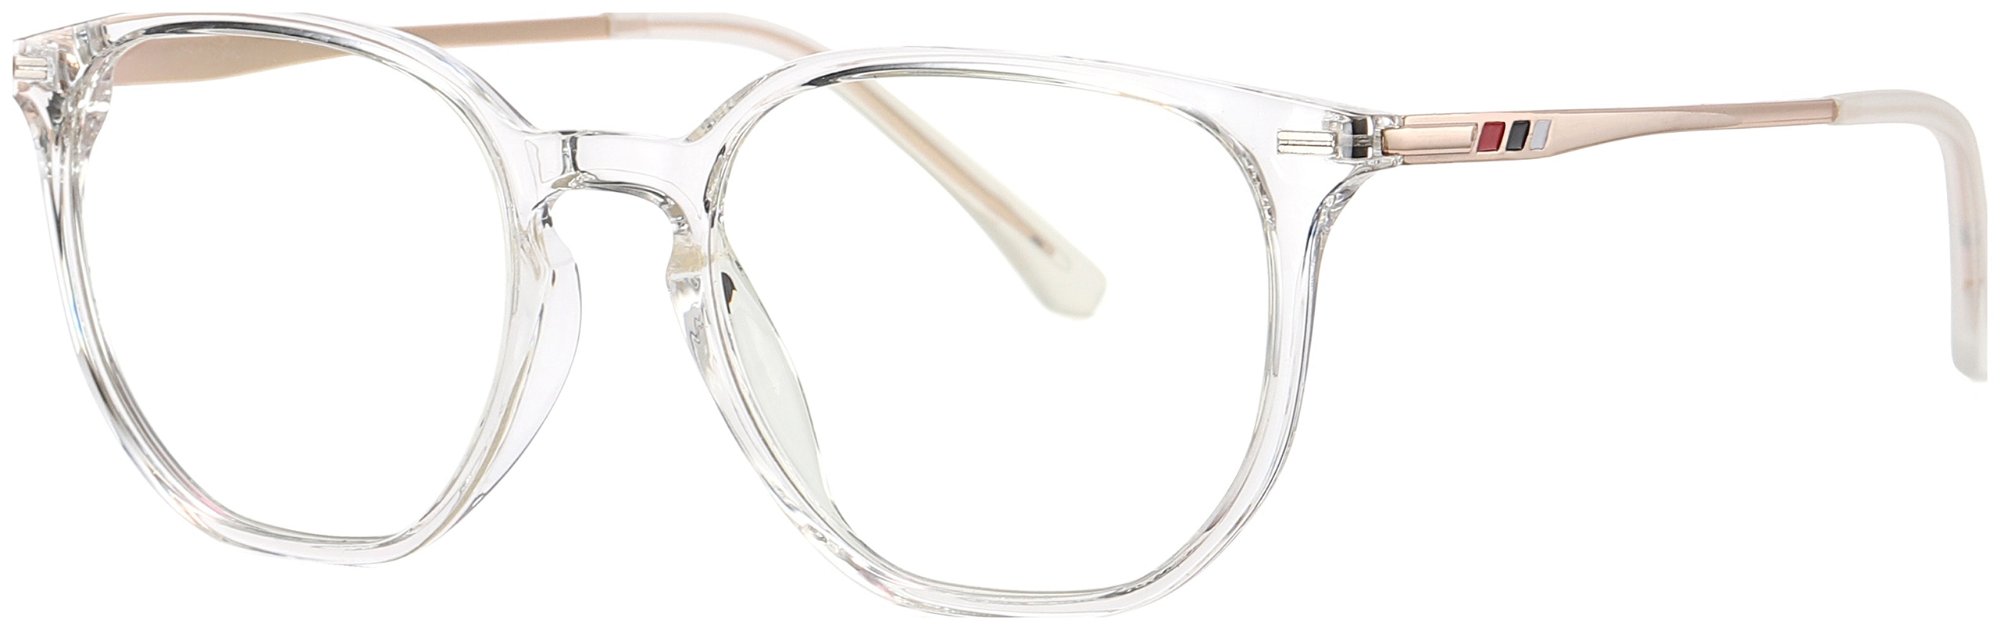 Regulær bluelight briller, Intro by Kaleu (H: 5,4 cm. x B: 2 cm. x L: 14,5 cm., Hvid)